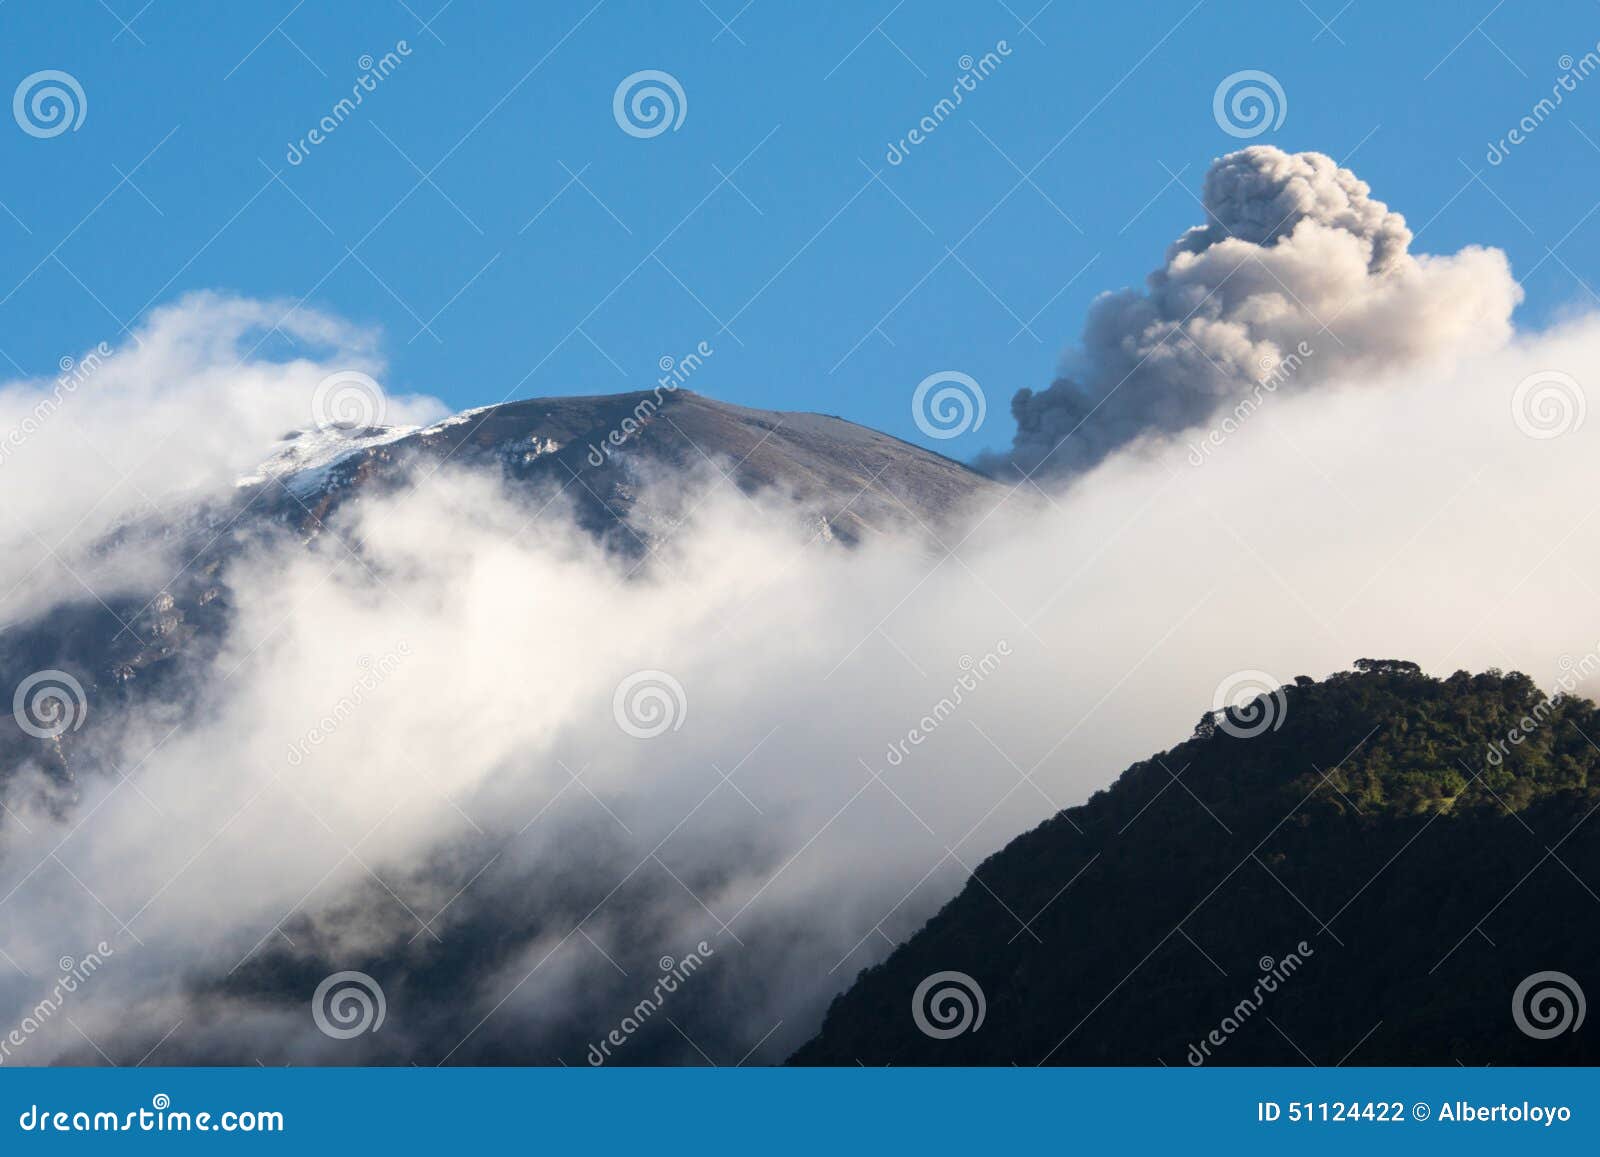 tungurahua volcano, ecuador